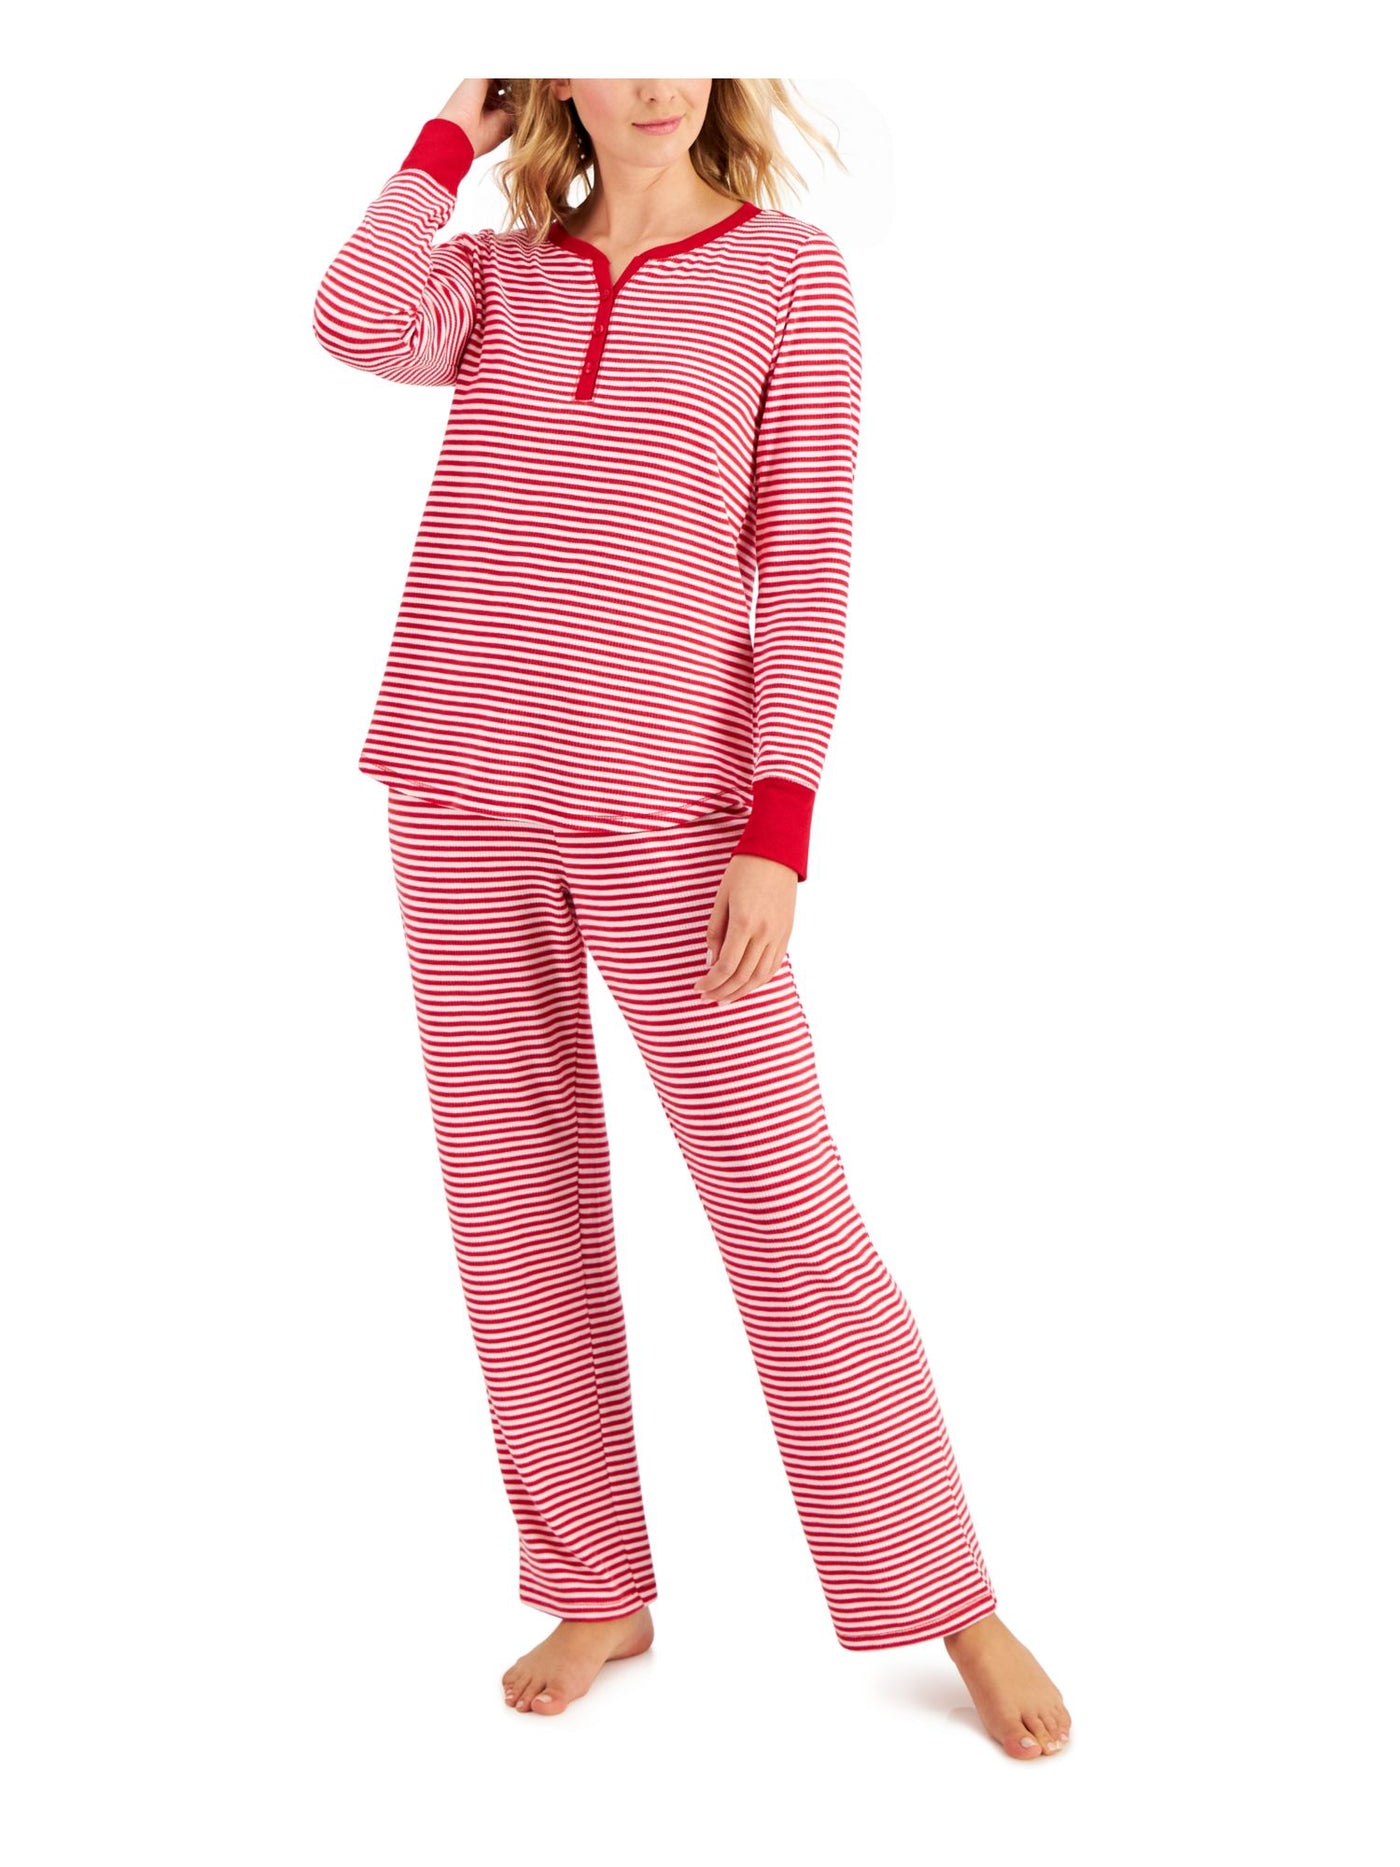 CHARTER CLUB Womens Red Striped Elastic Band Long Sleeve Henley Top Straight leg Pants Pajamas M